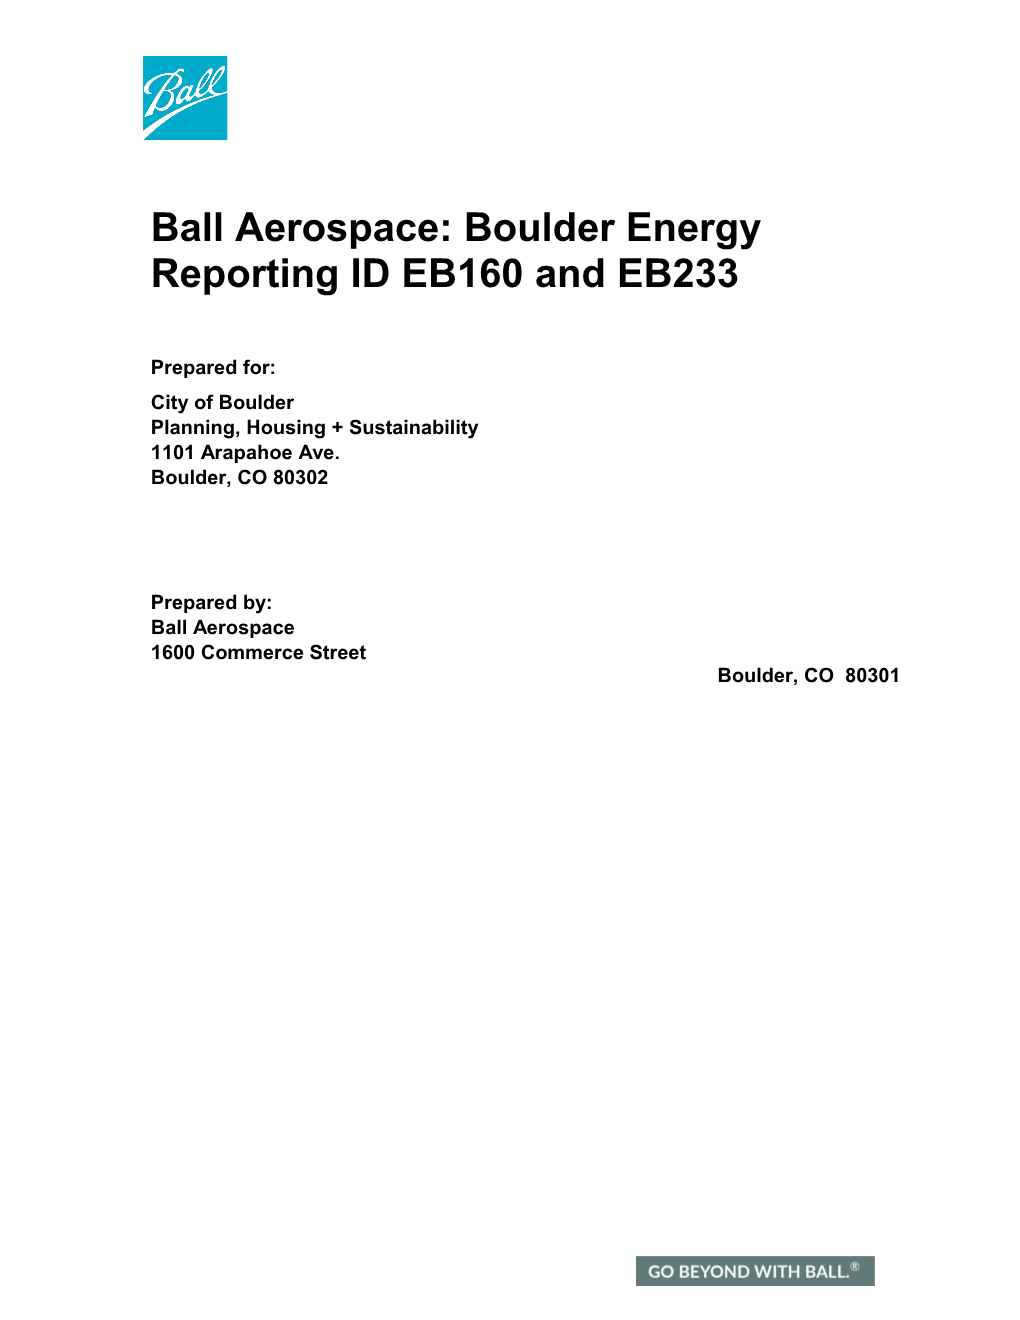 Ball Aerospace: Boulder Energy Reporting ID EB160 and EB233